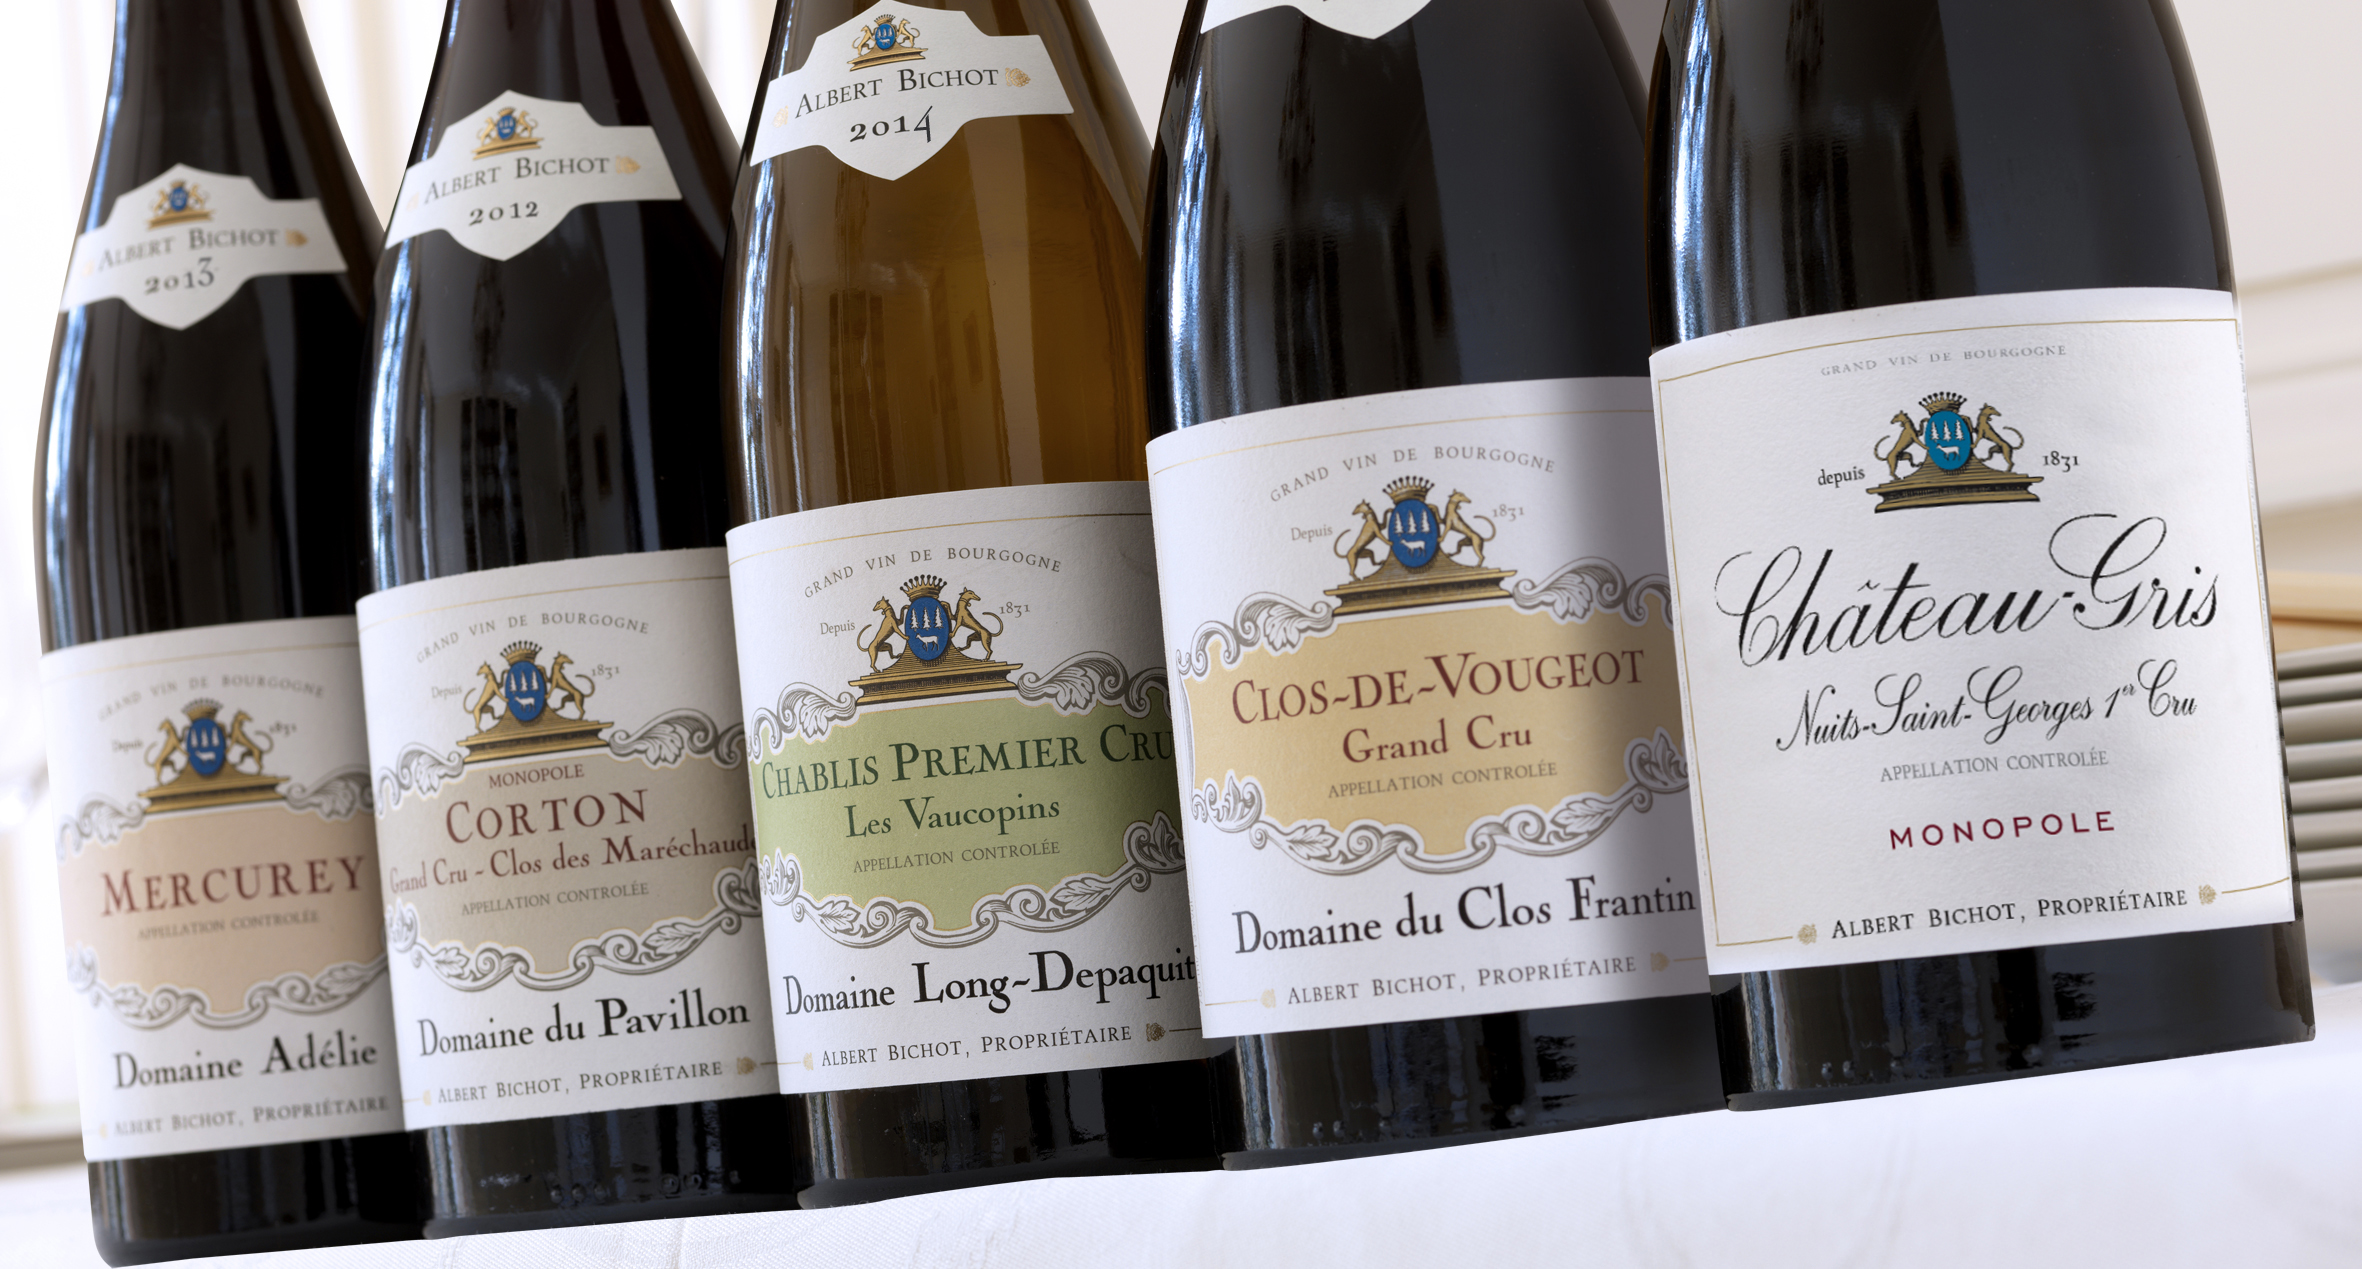 Albert Bichot veinimõis – Burgundia piirkonna meistriklass!